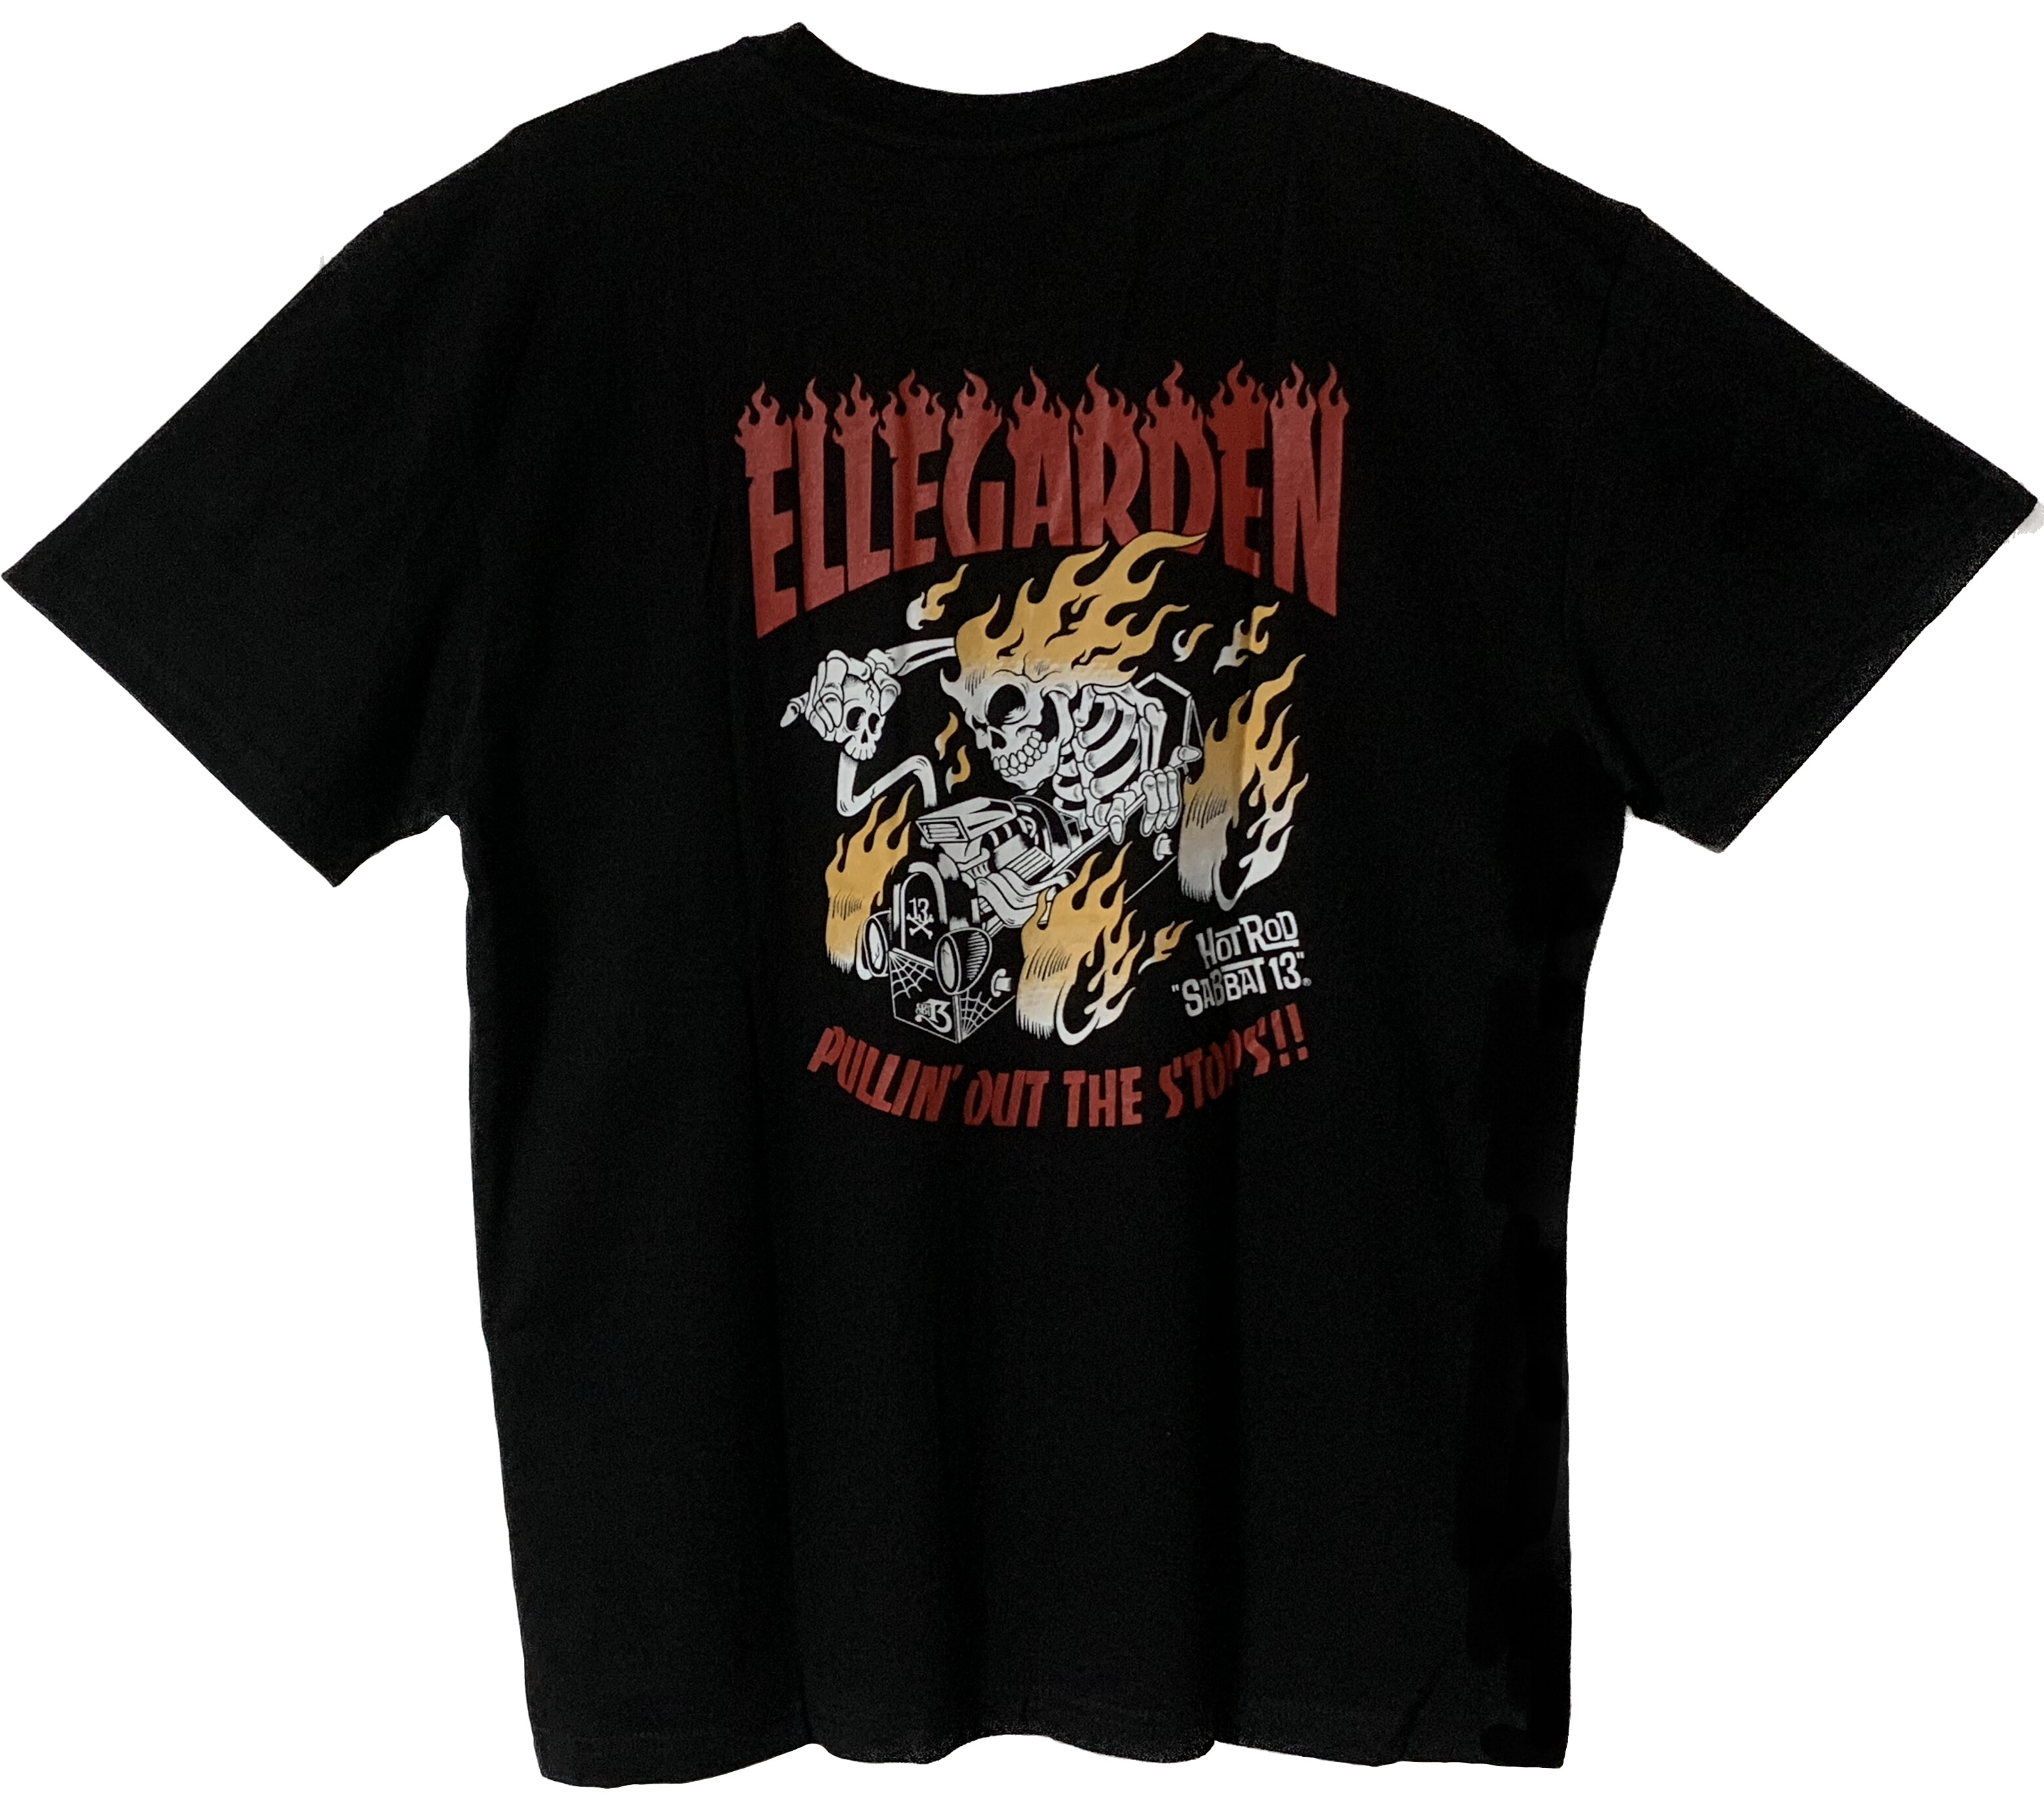 Ellegarden (엘르가든) - SABBAT13 티셔츠 [블랙 컬러/L사이즈]